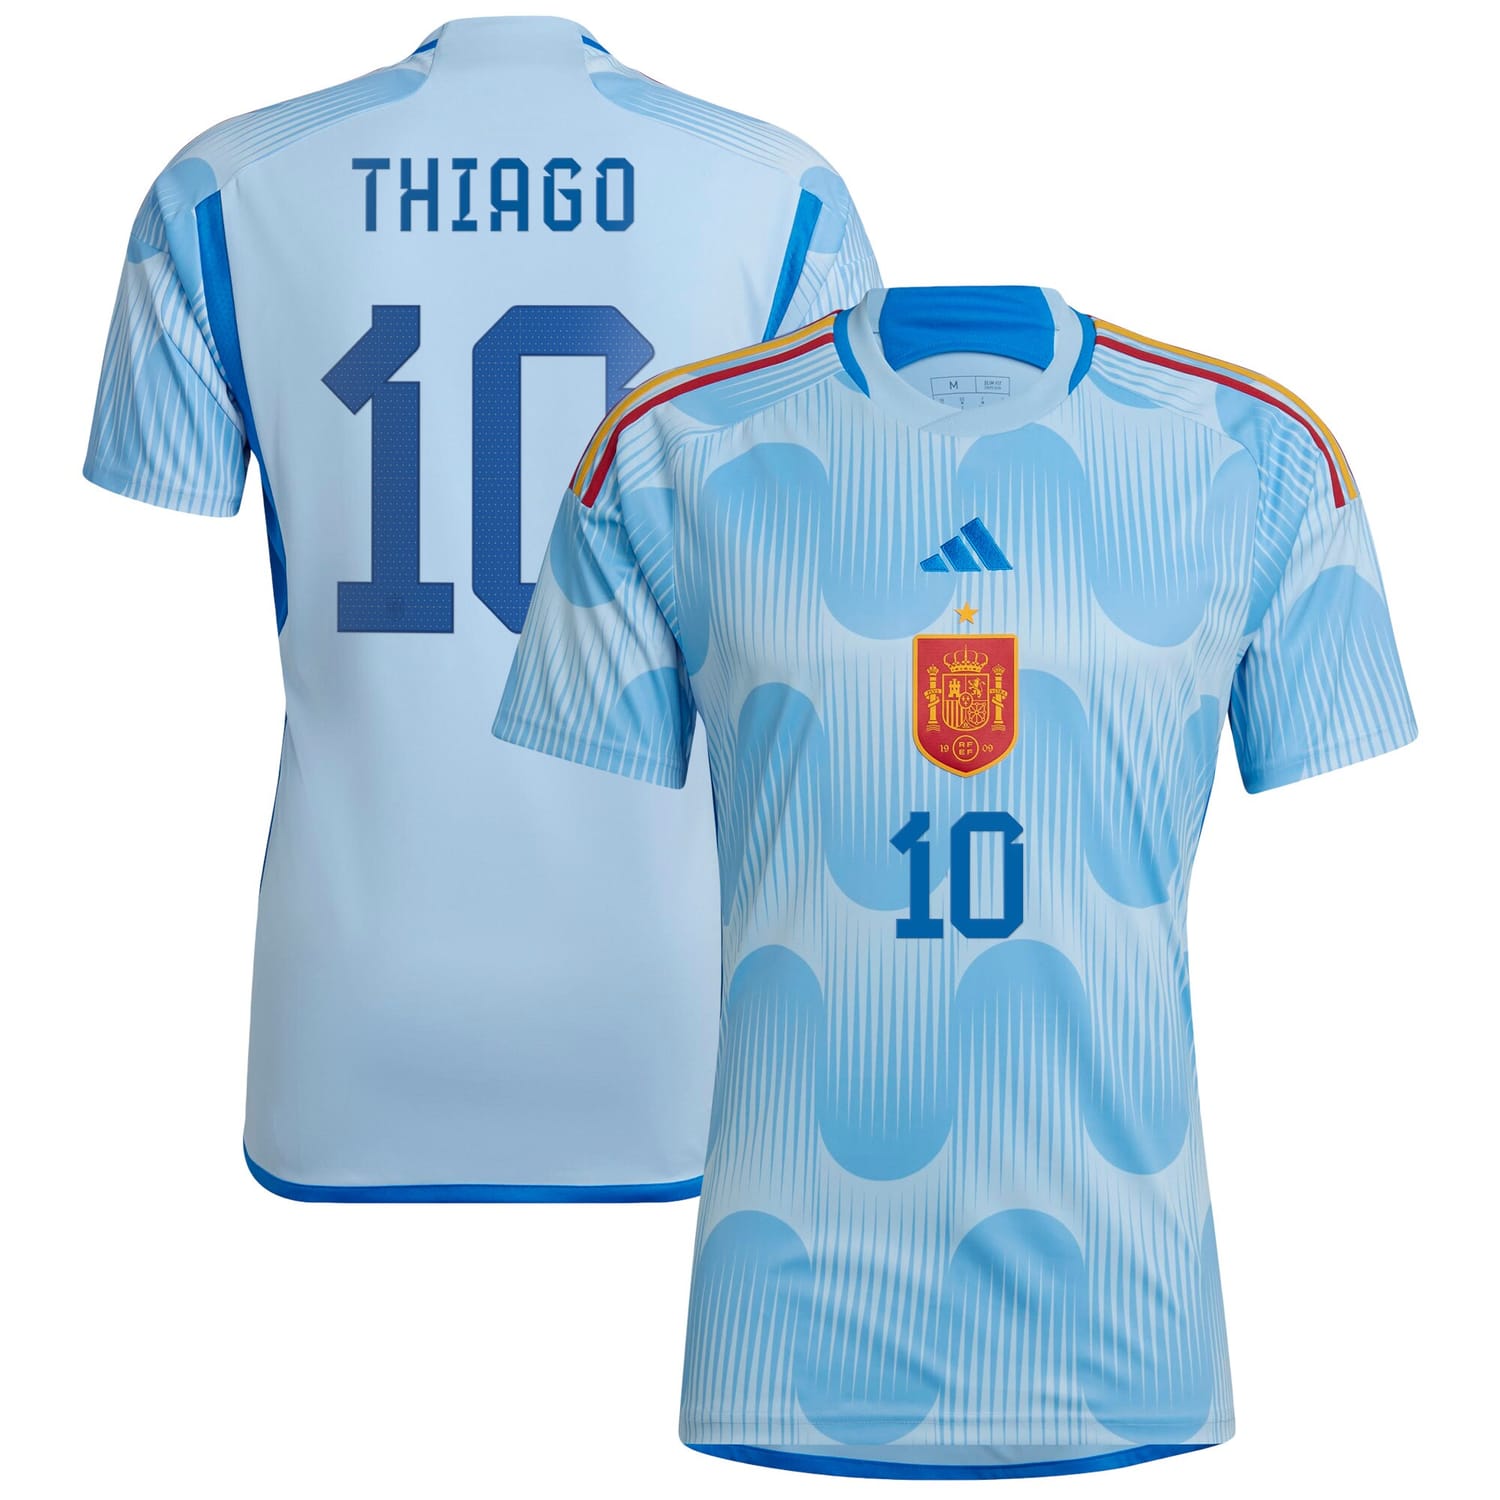 Spain National Team Away Jersey Shirt player Thiago 10 printing for Men